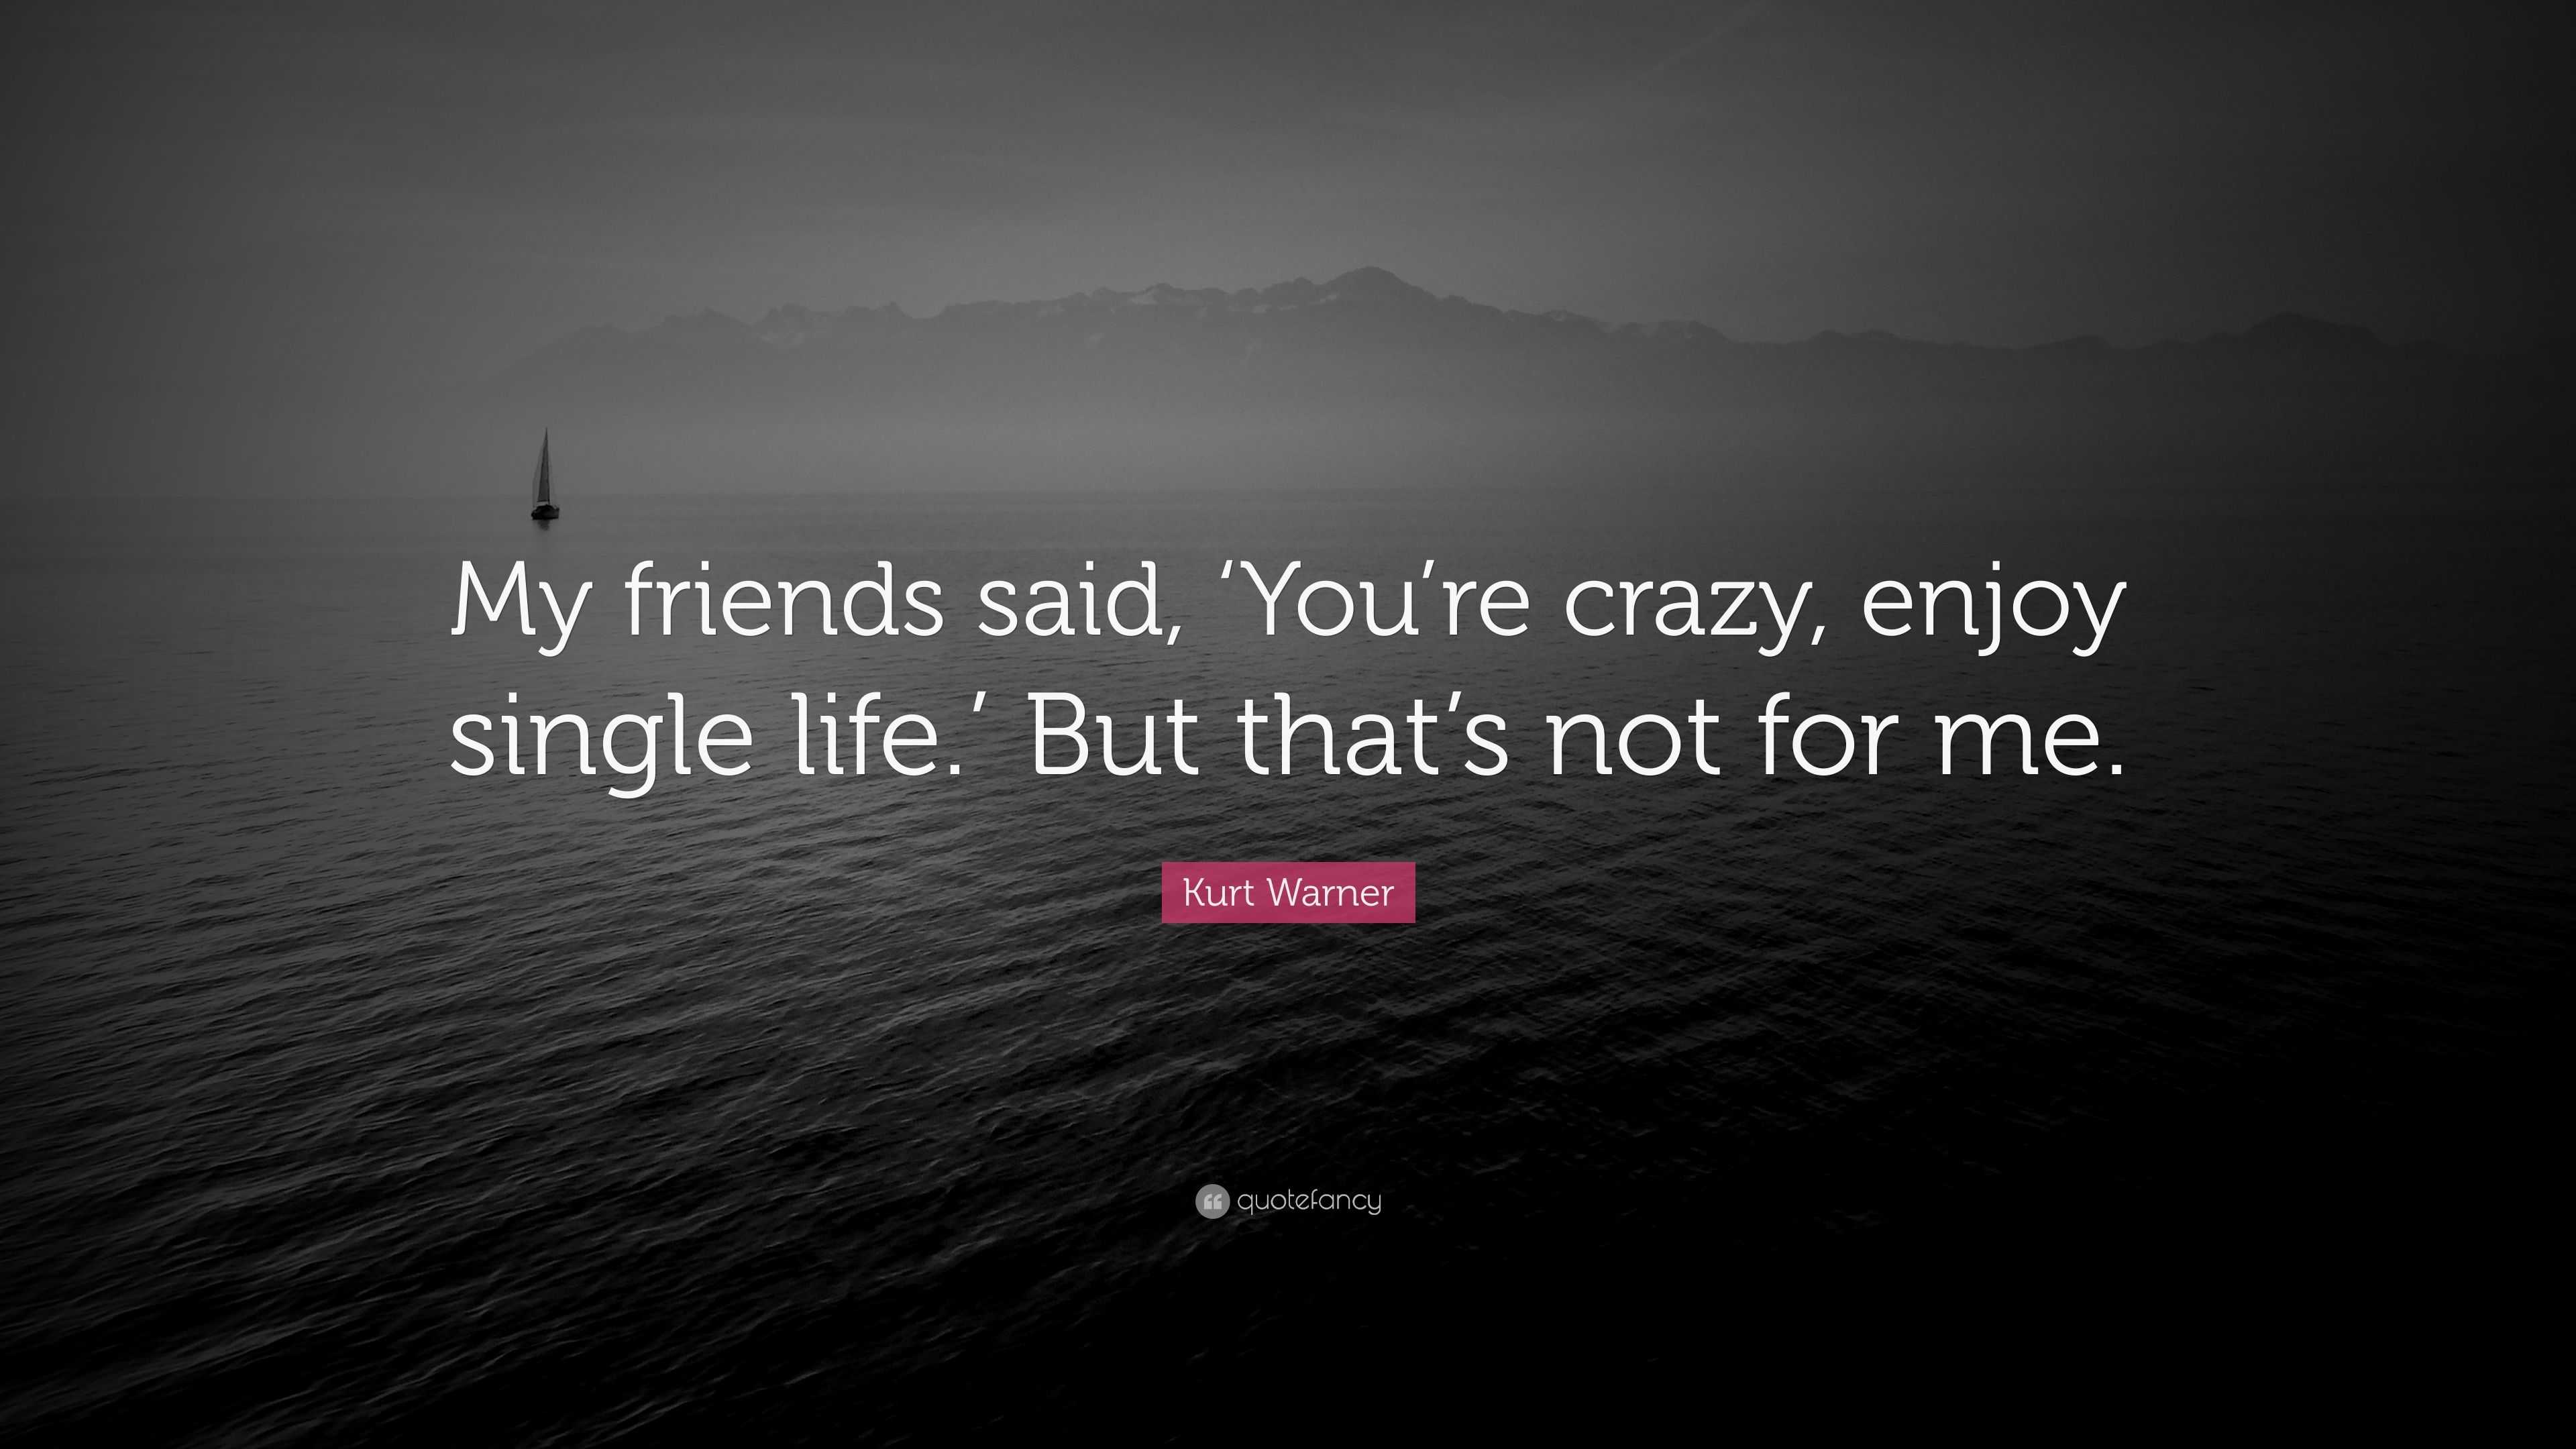 Kurt Warner Quote “My friends said You re crazy enjoy